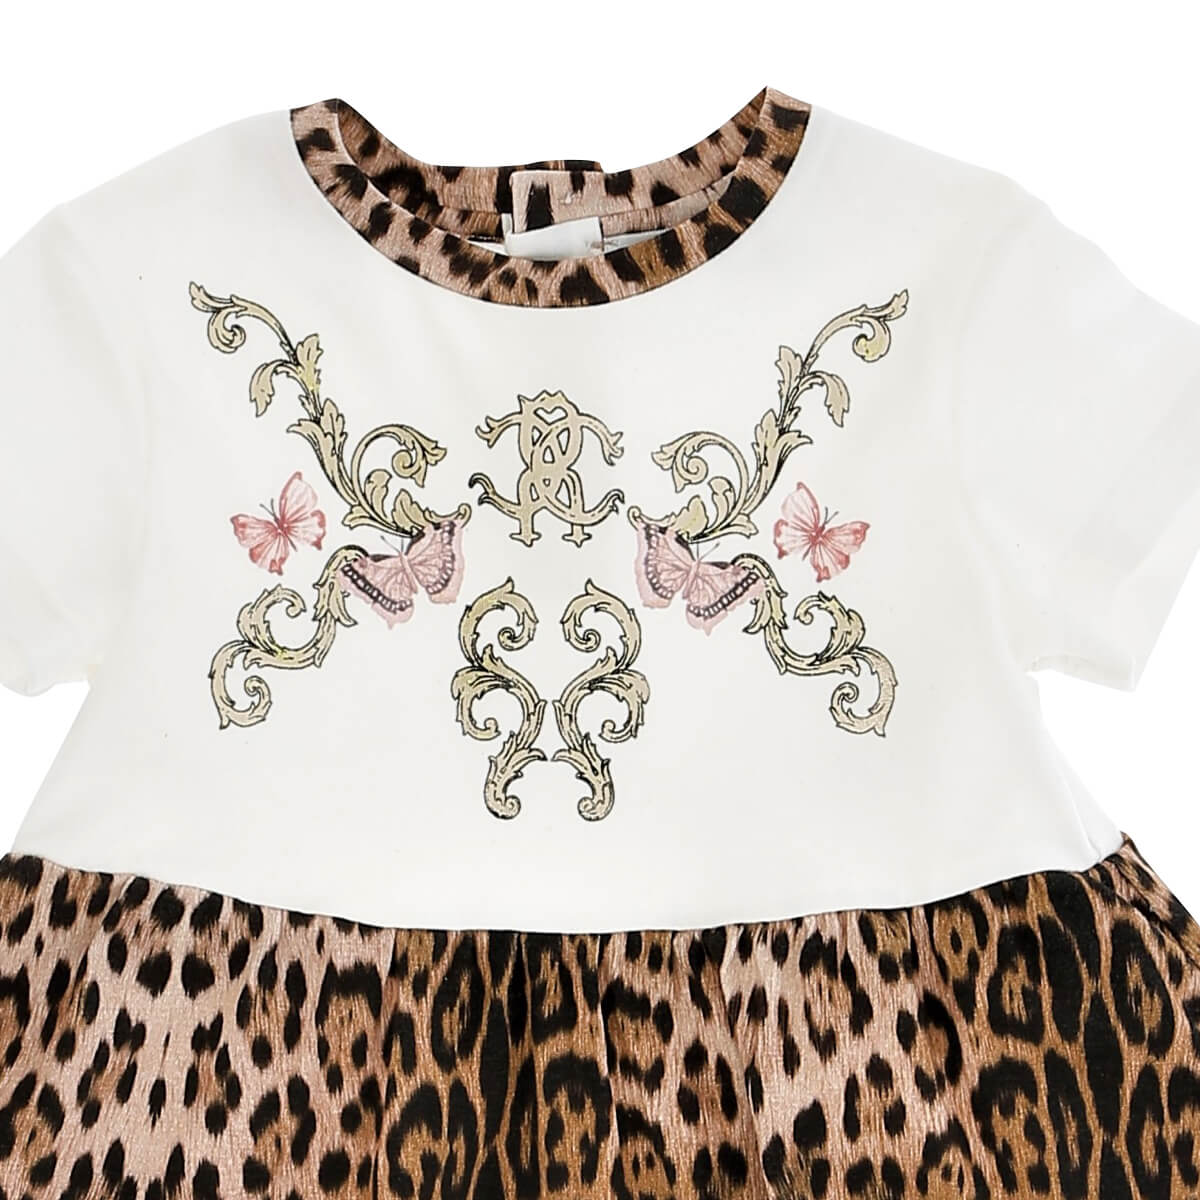 Roberto Cavalli Baby Girls Leopard Dress Heritage Print